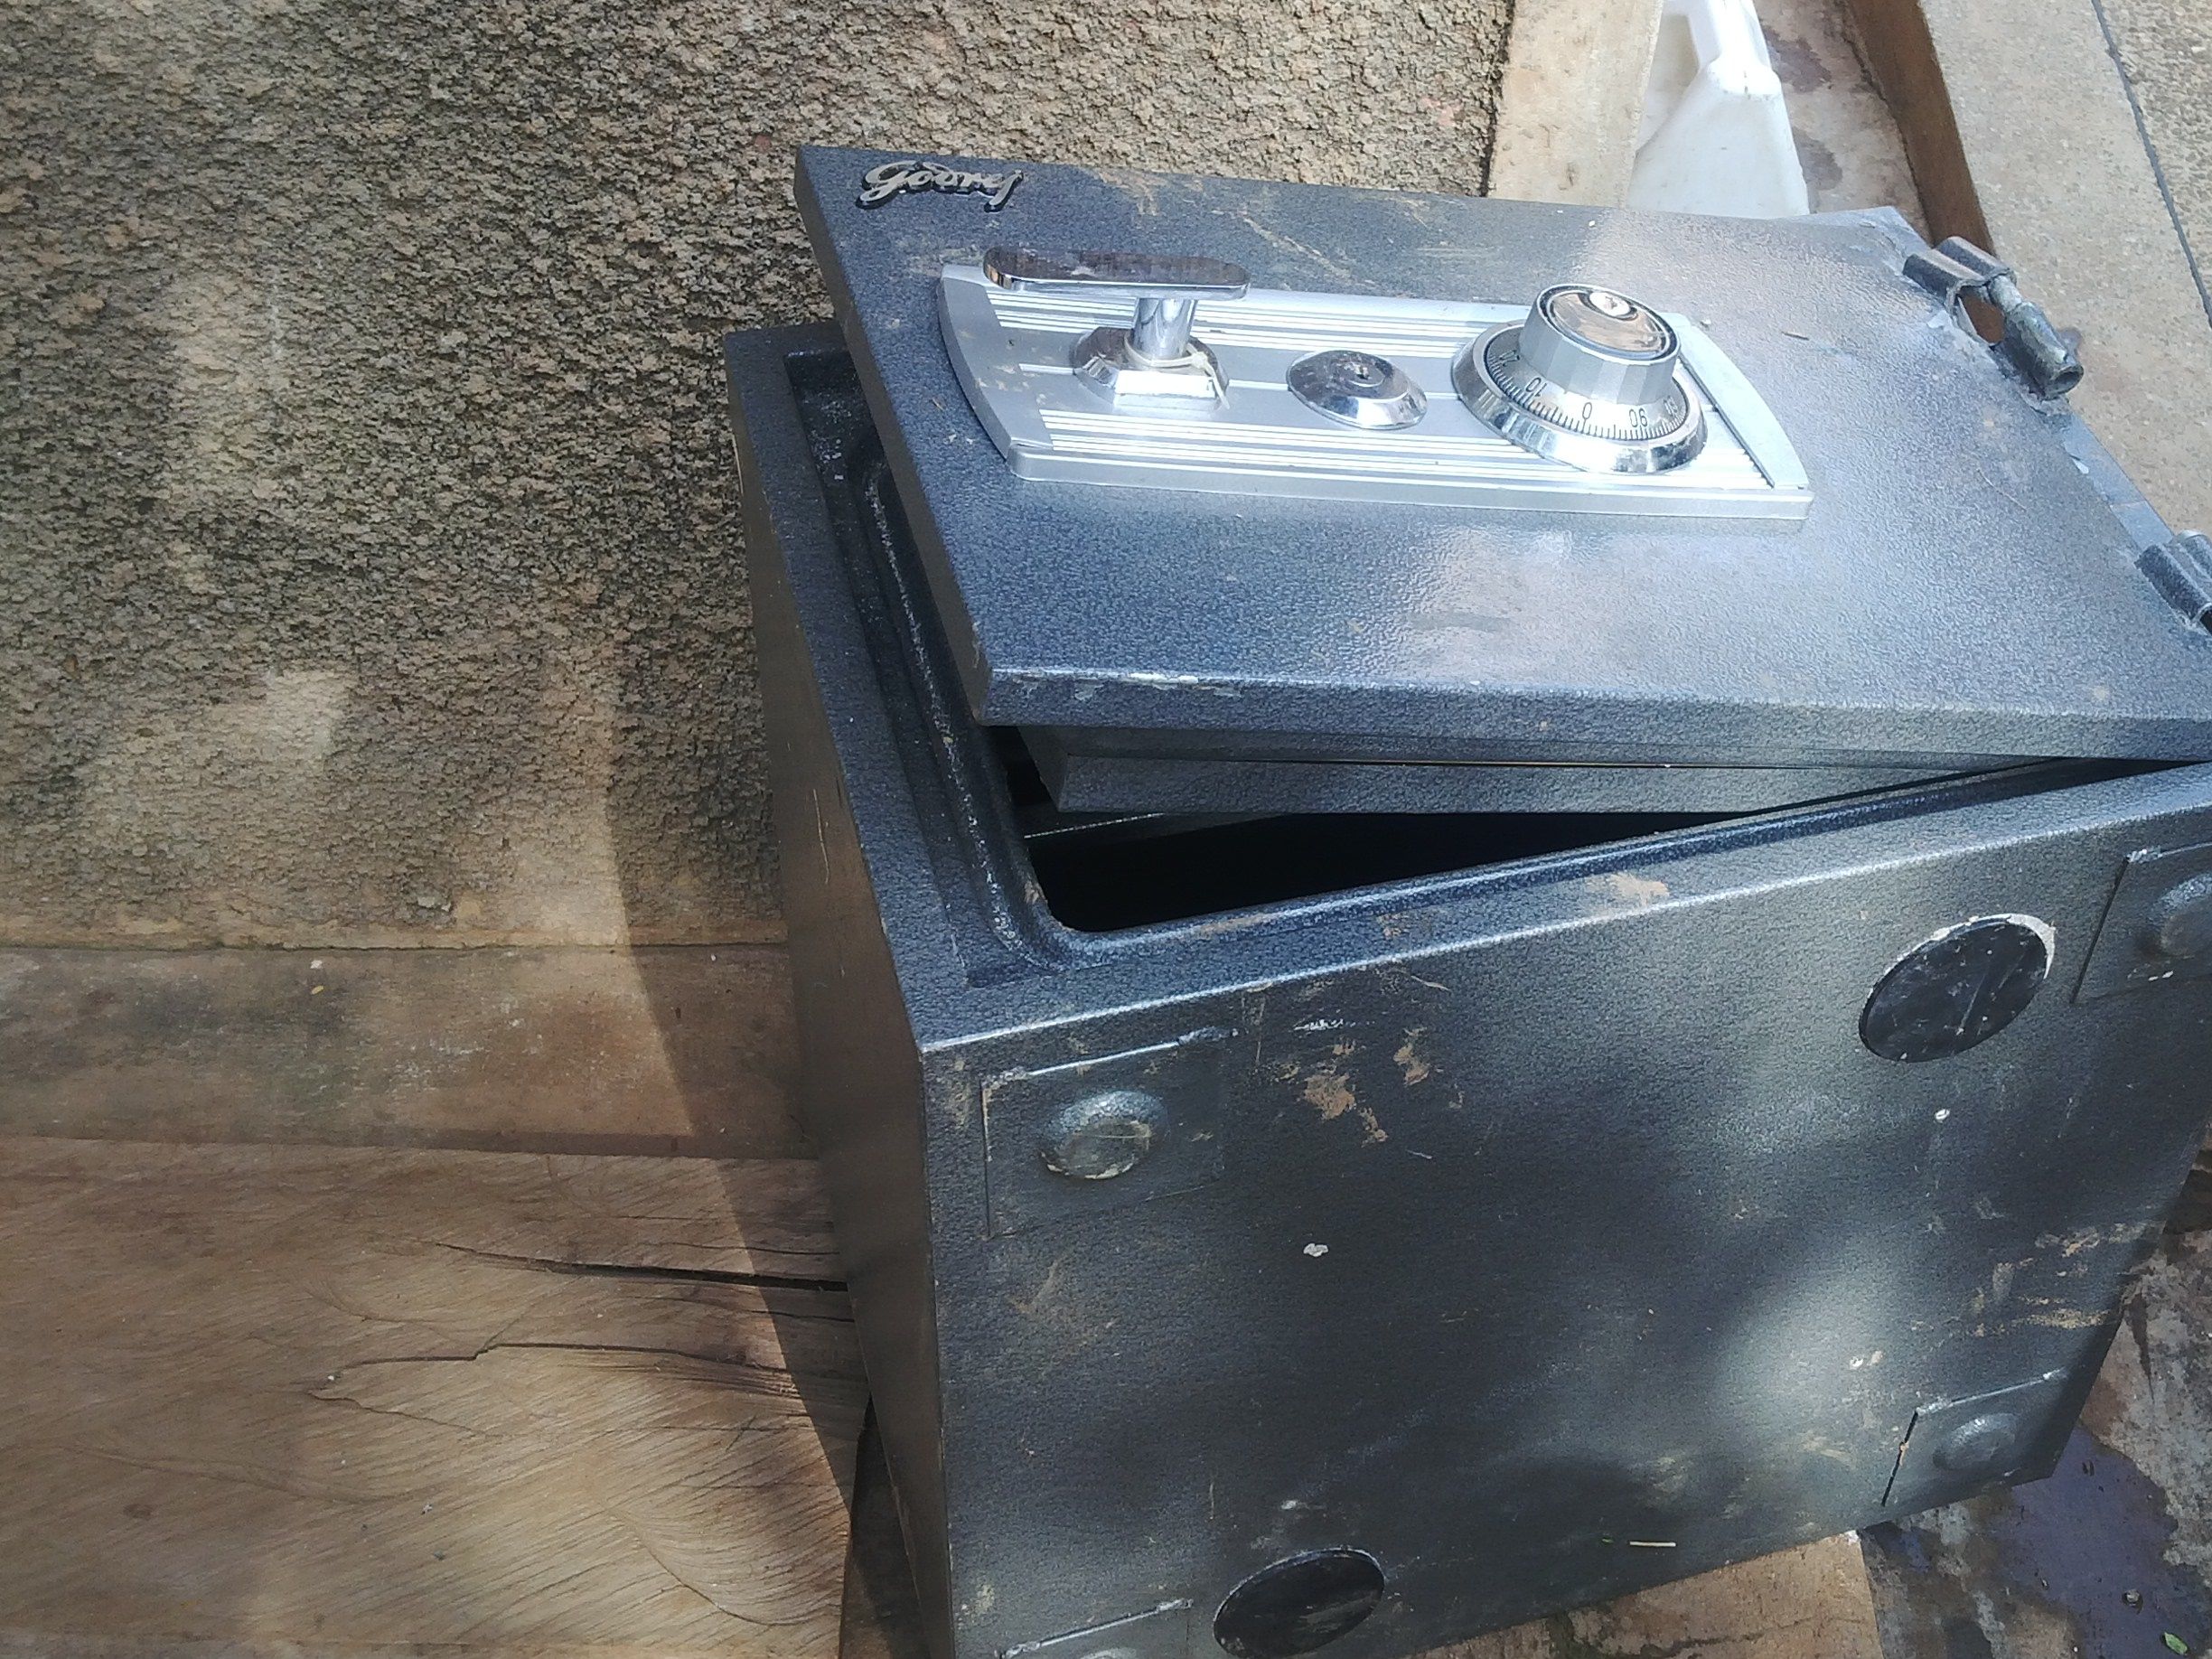 The safe box belonging to HRNJ-Uganda, HRNJ-Uganda